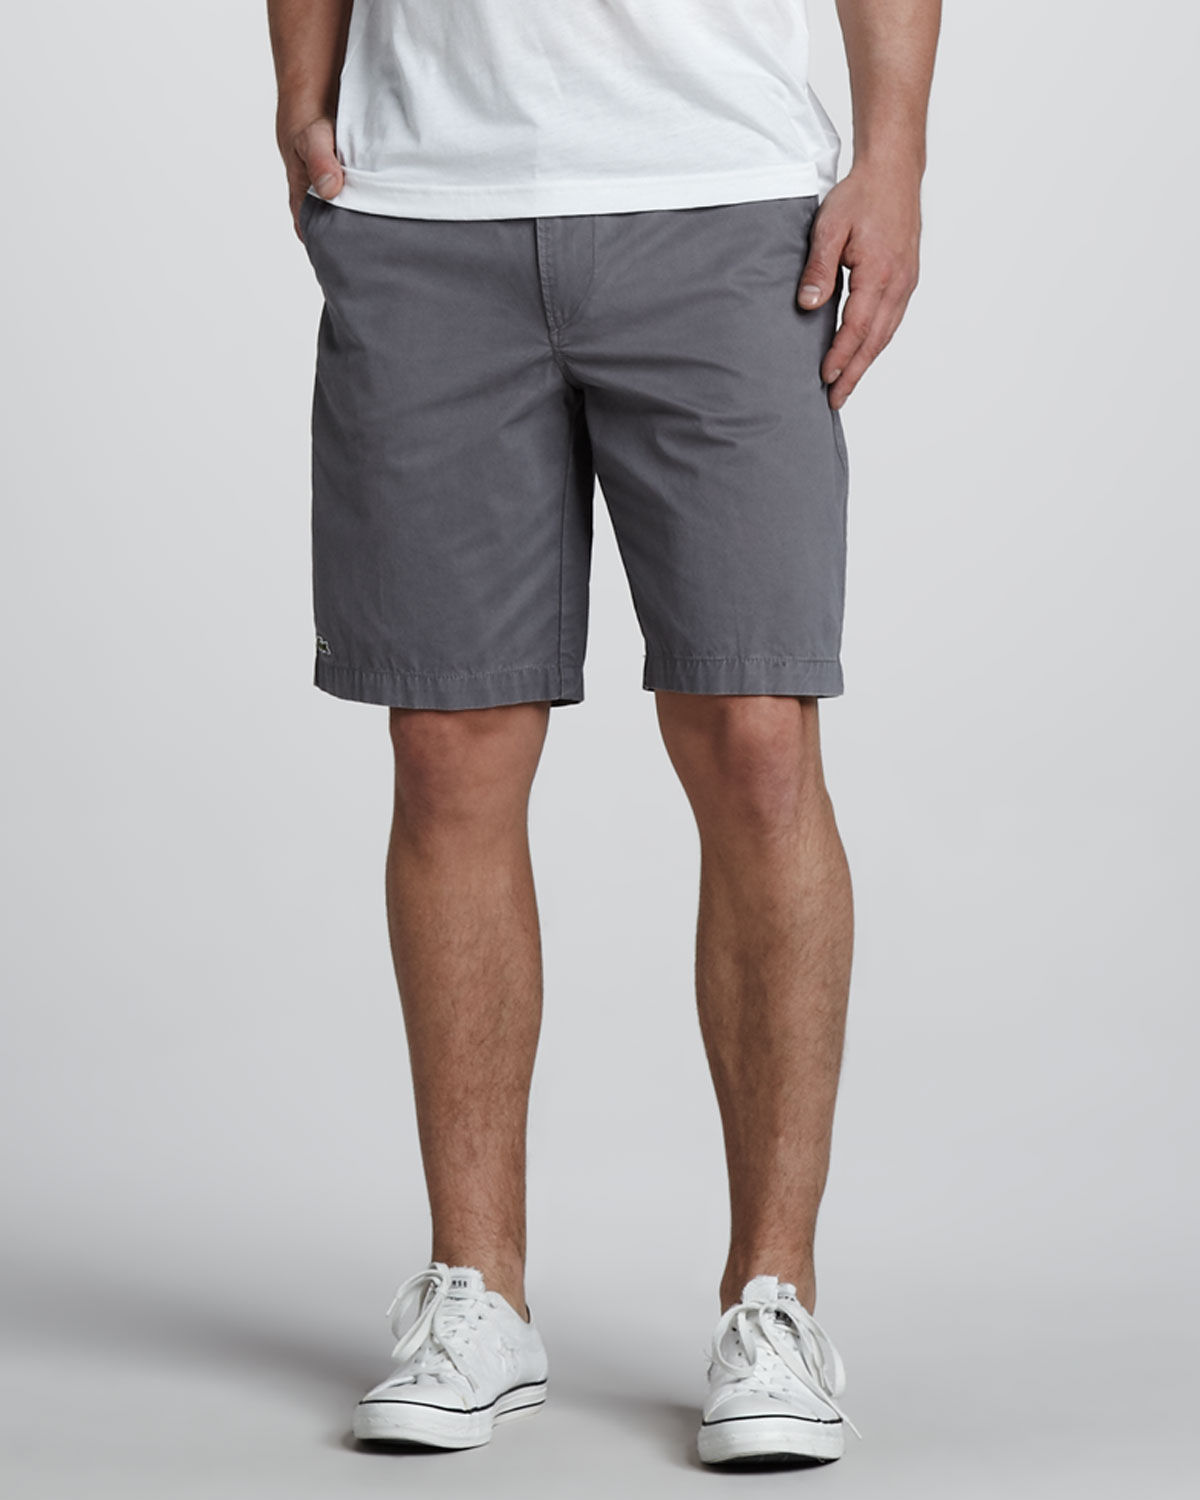 Lacoste Classic Bermuda Shorts in Smoke Grey (Gray) for Men - Lyst